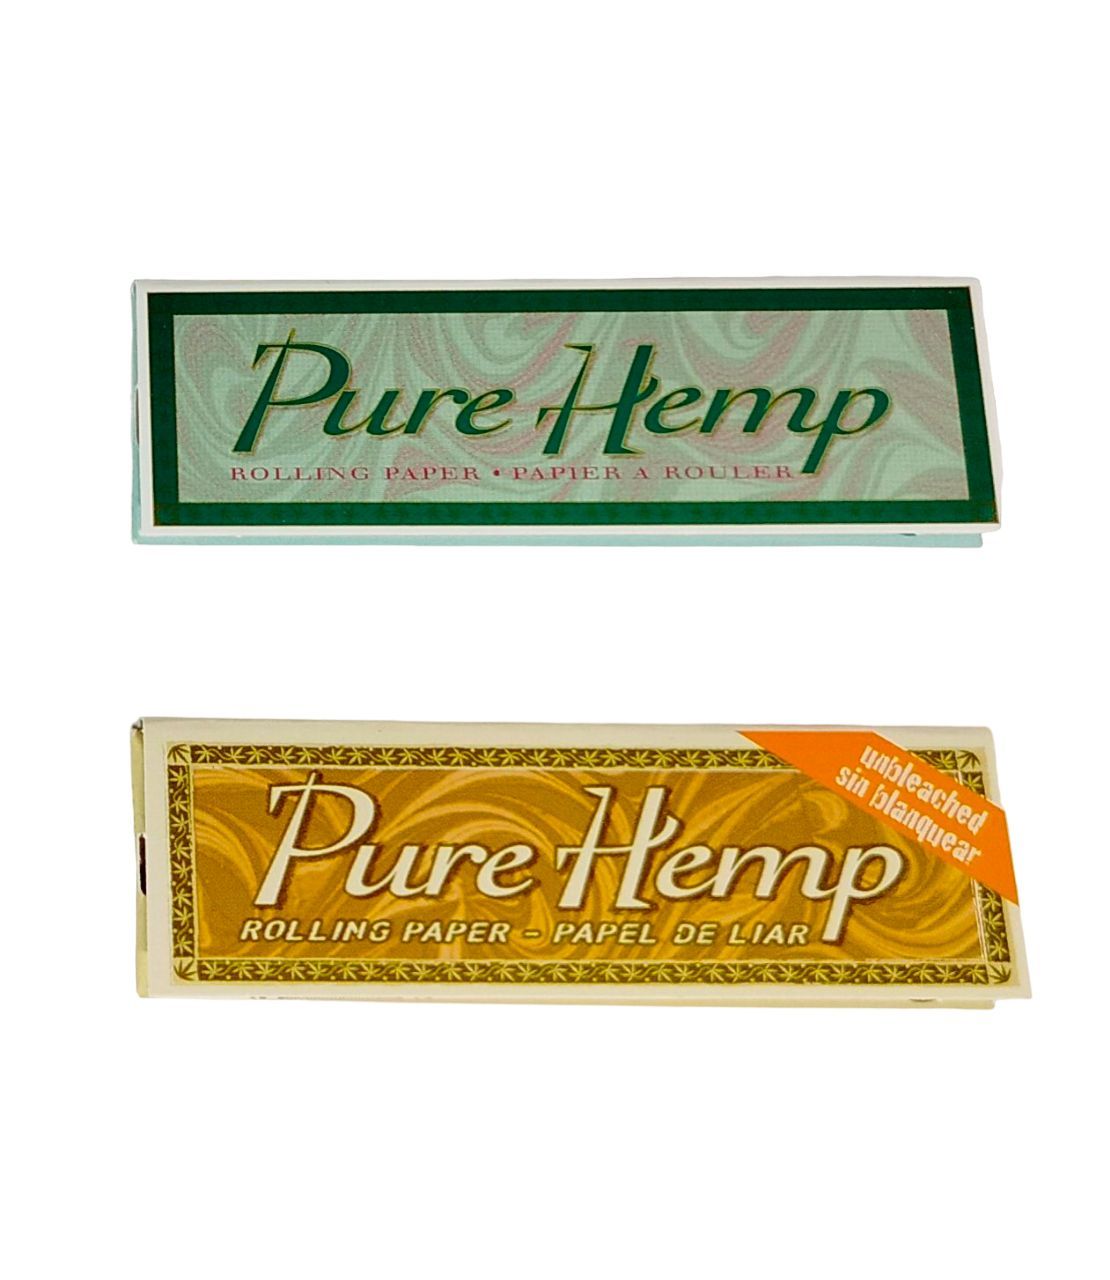 Pure hemp steam фото 20